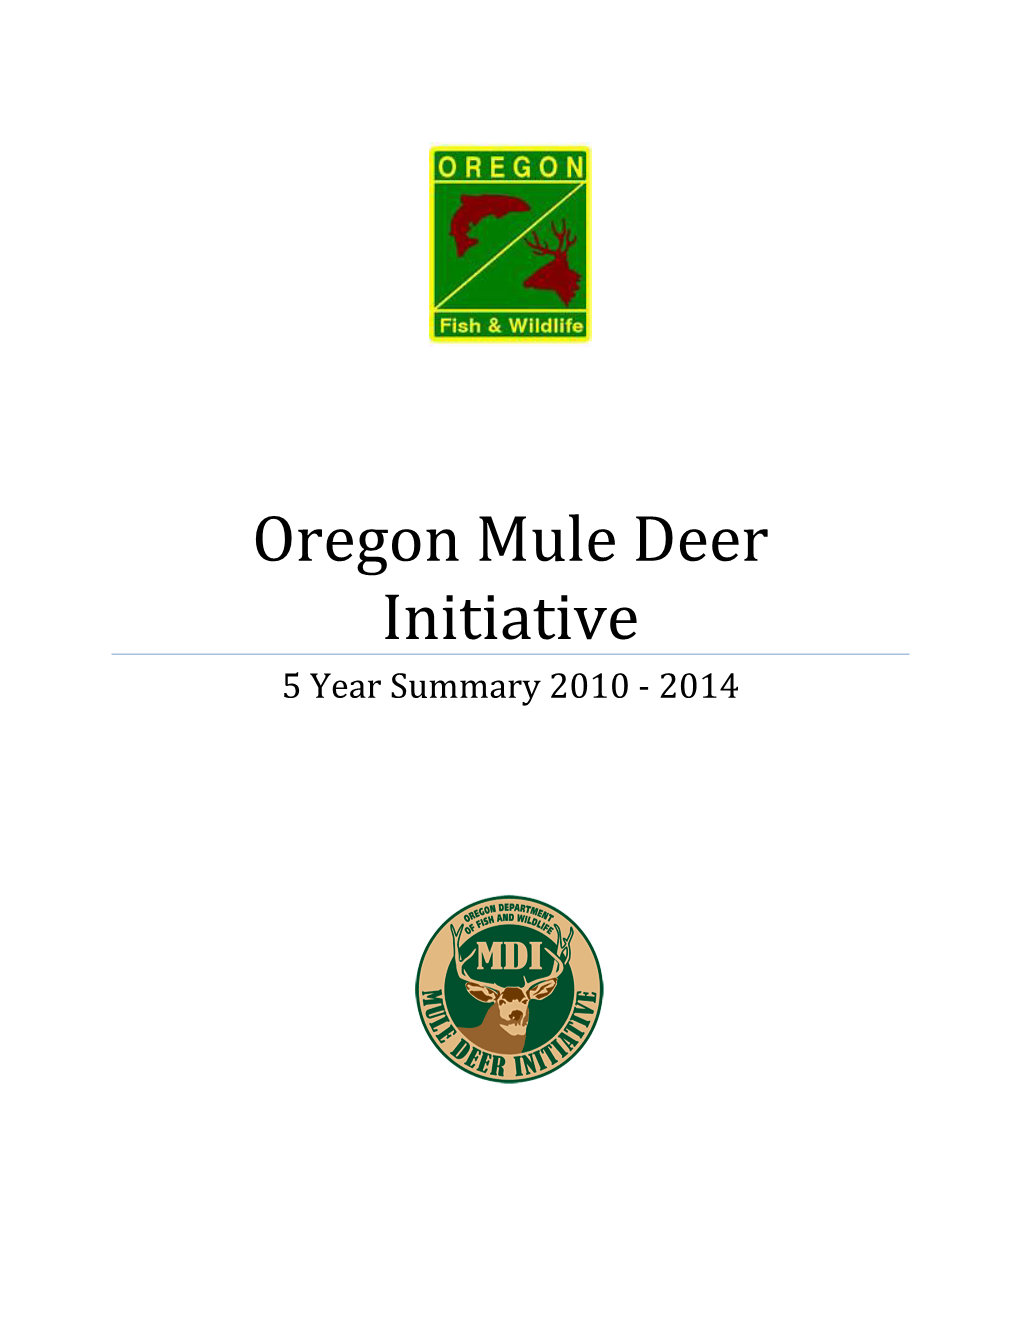 Oregon Mule Deer Initiative 5 Year Summary 2010 - 2014